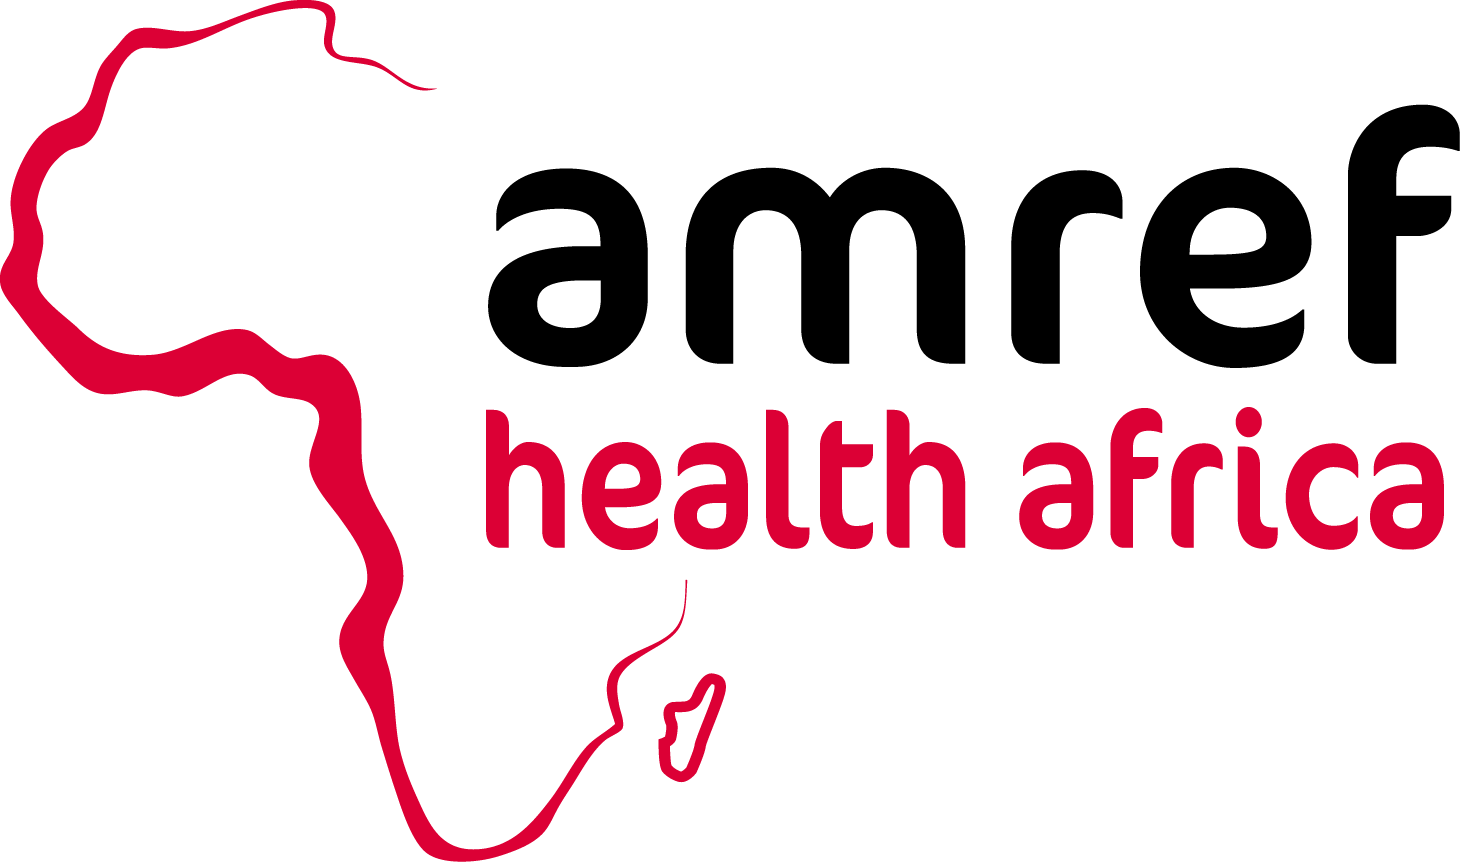 Amref Health Africa